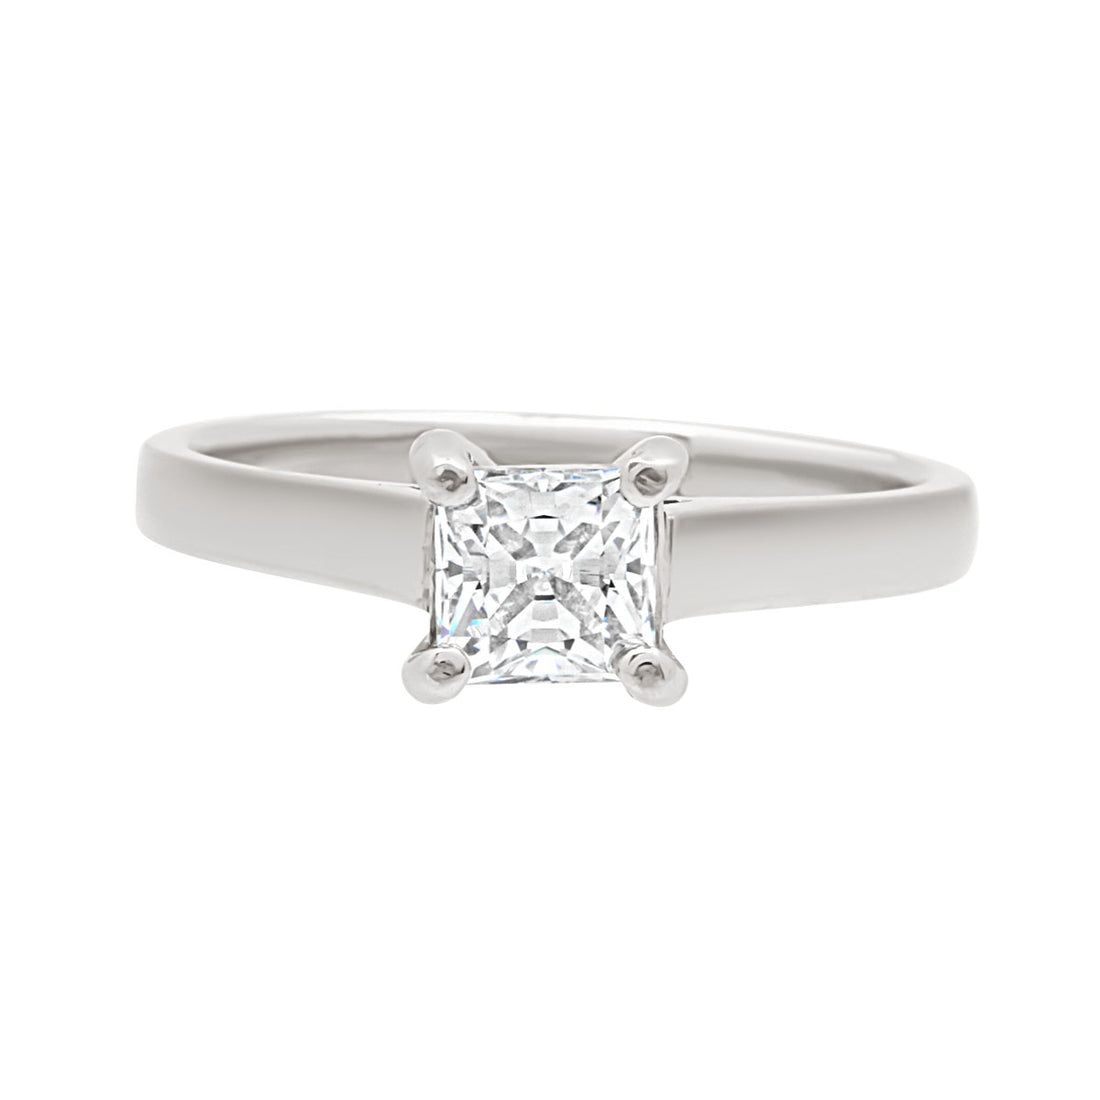 Princess cut engagement ring in platinum